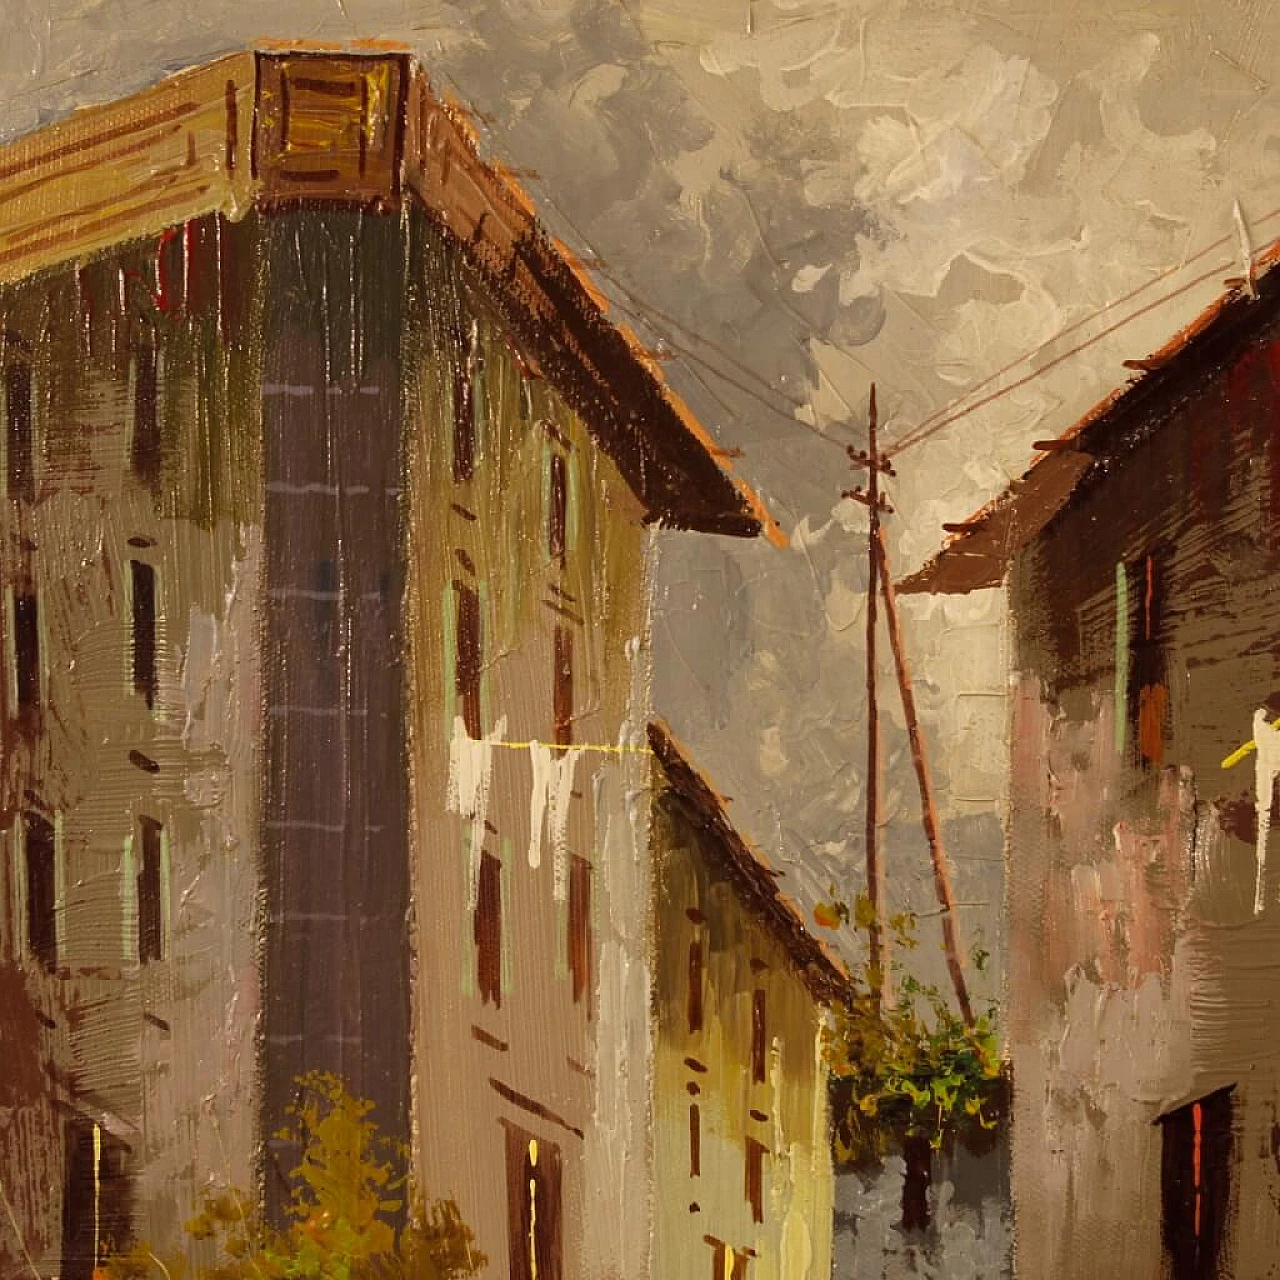 Veduta urbana in stile Impressionista, tecnica mista su tela 9